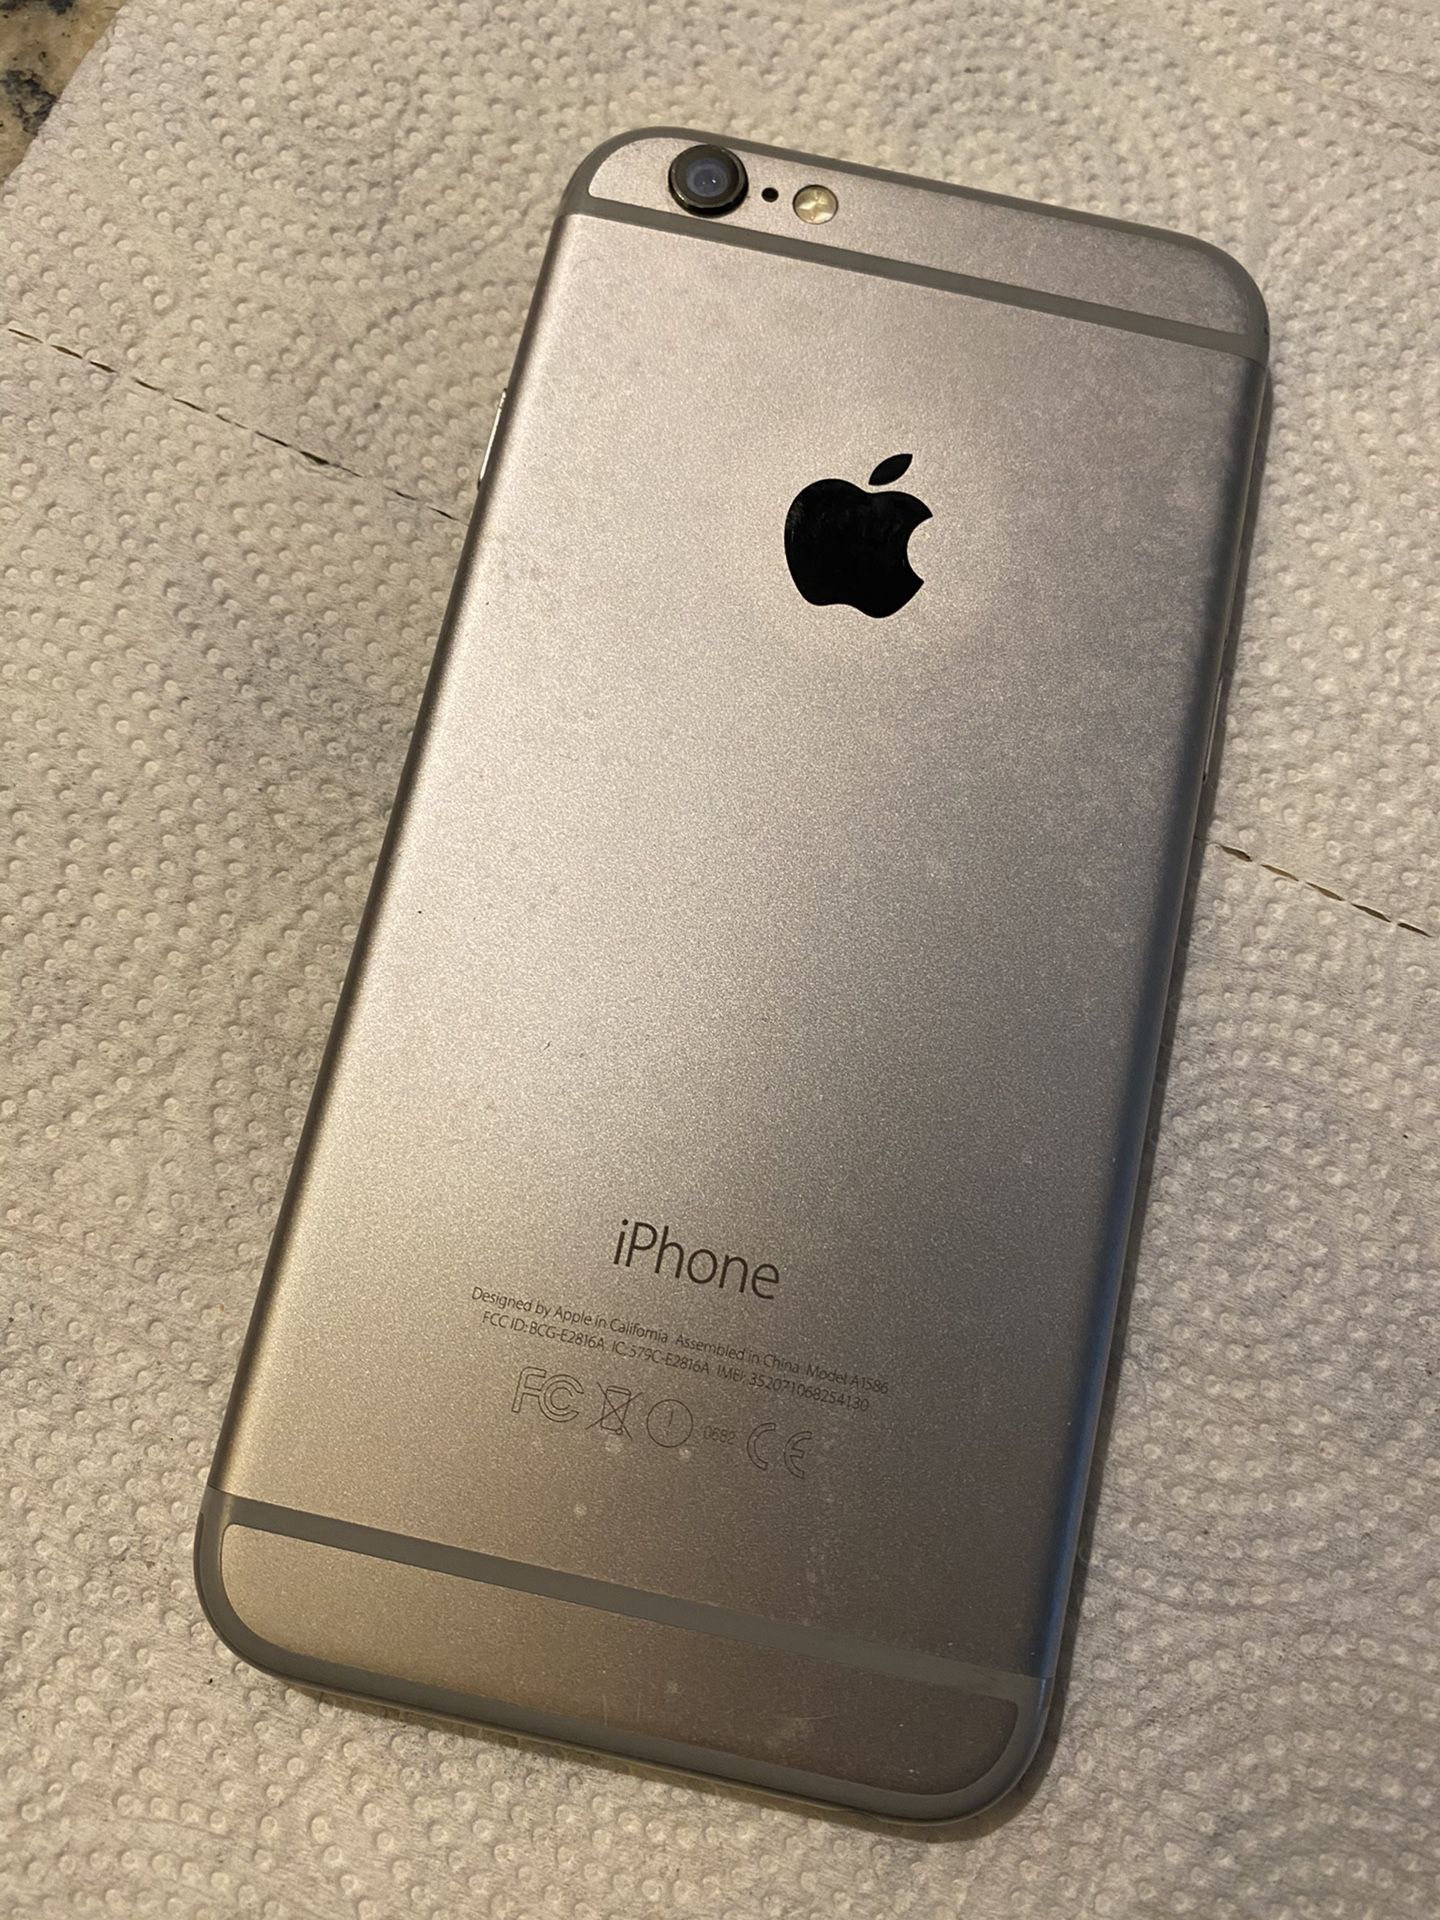 iPhone 6 factory unlock / no fingerprint